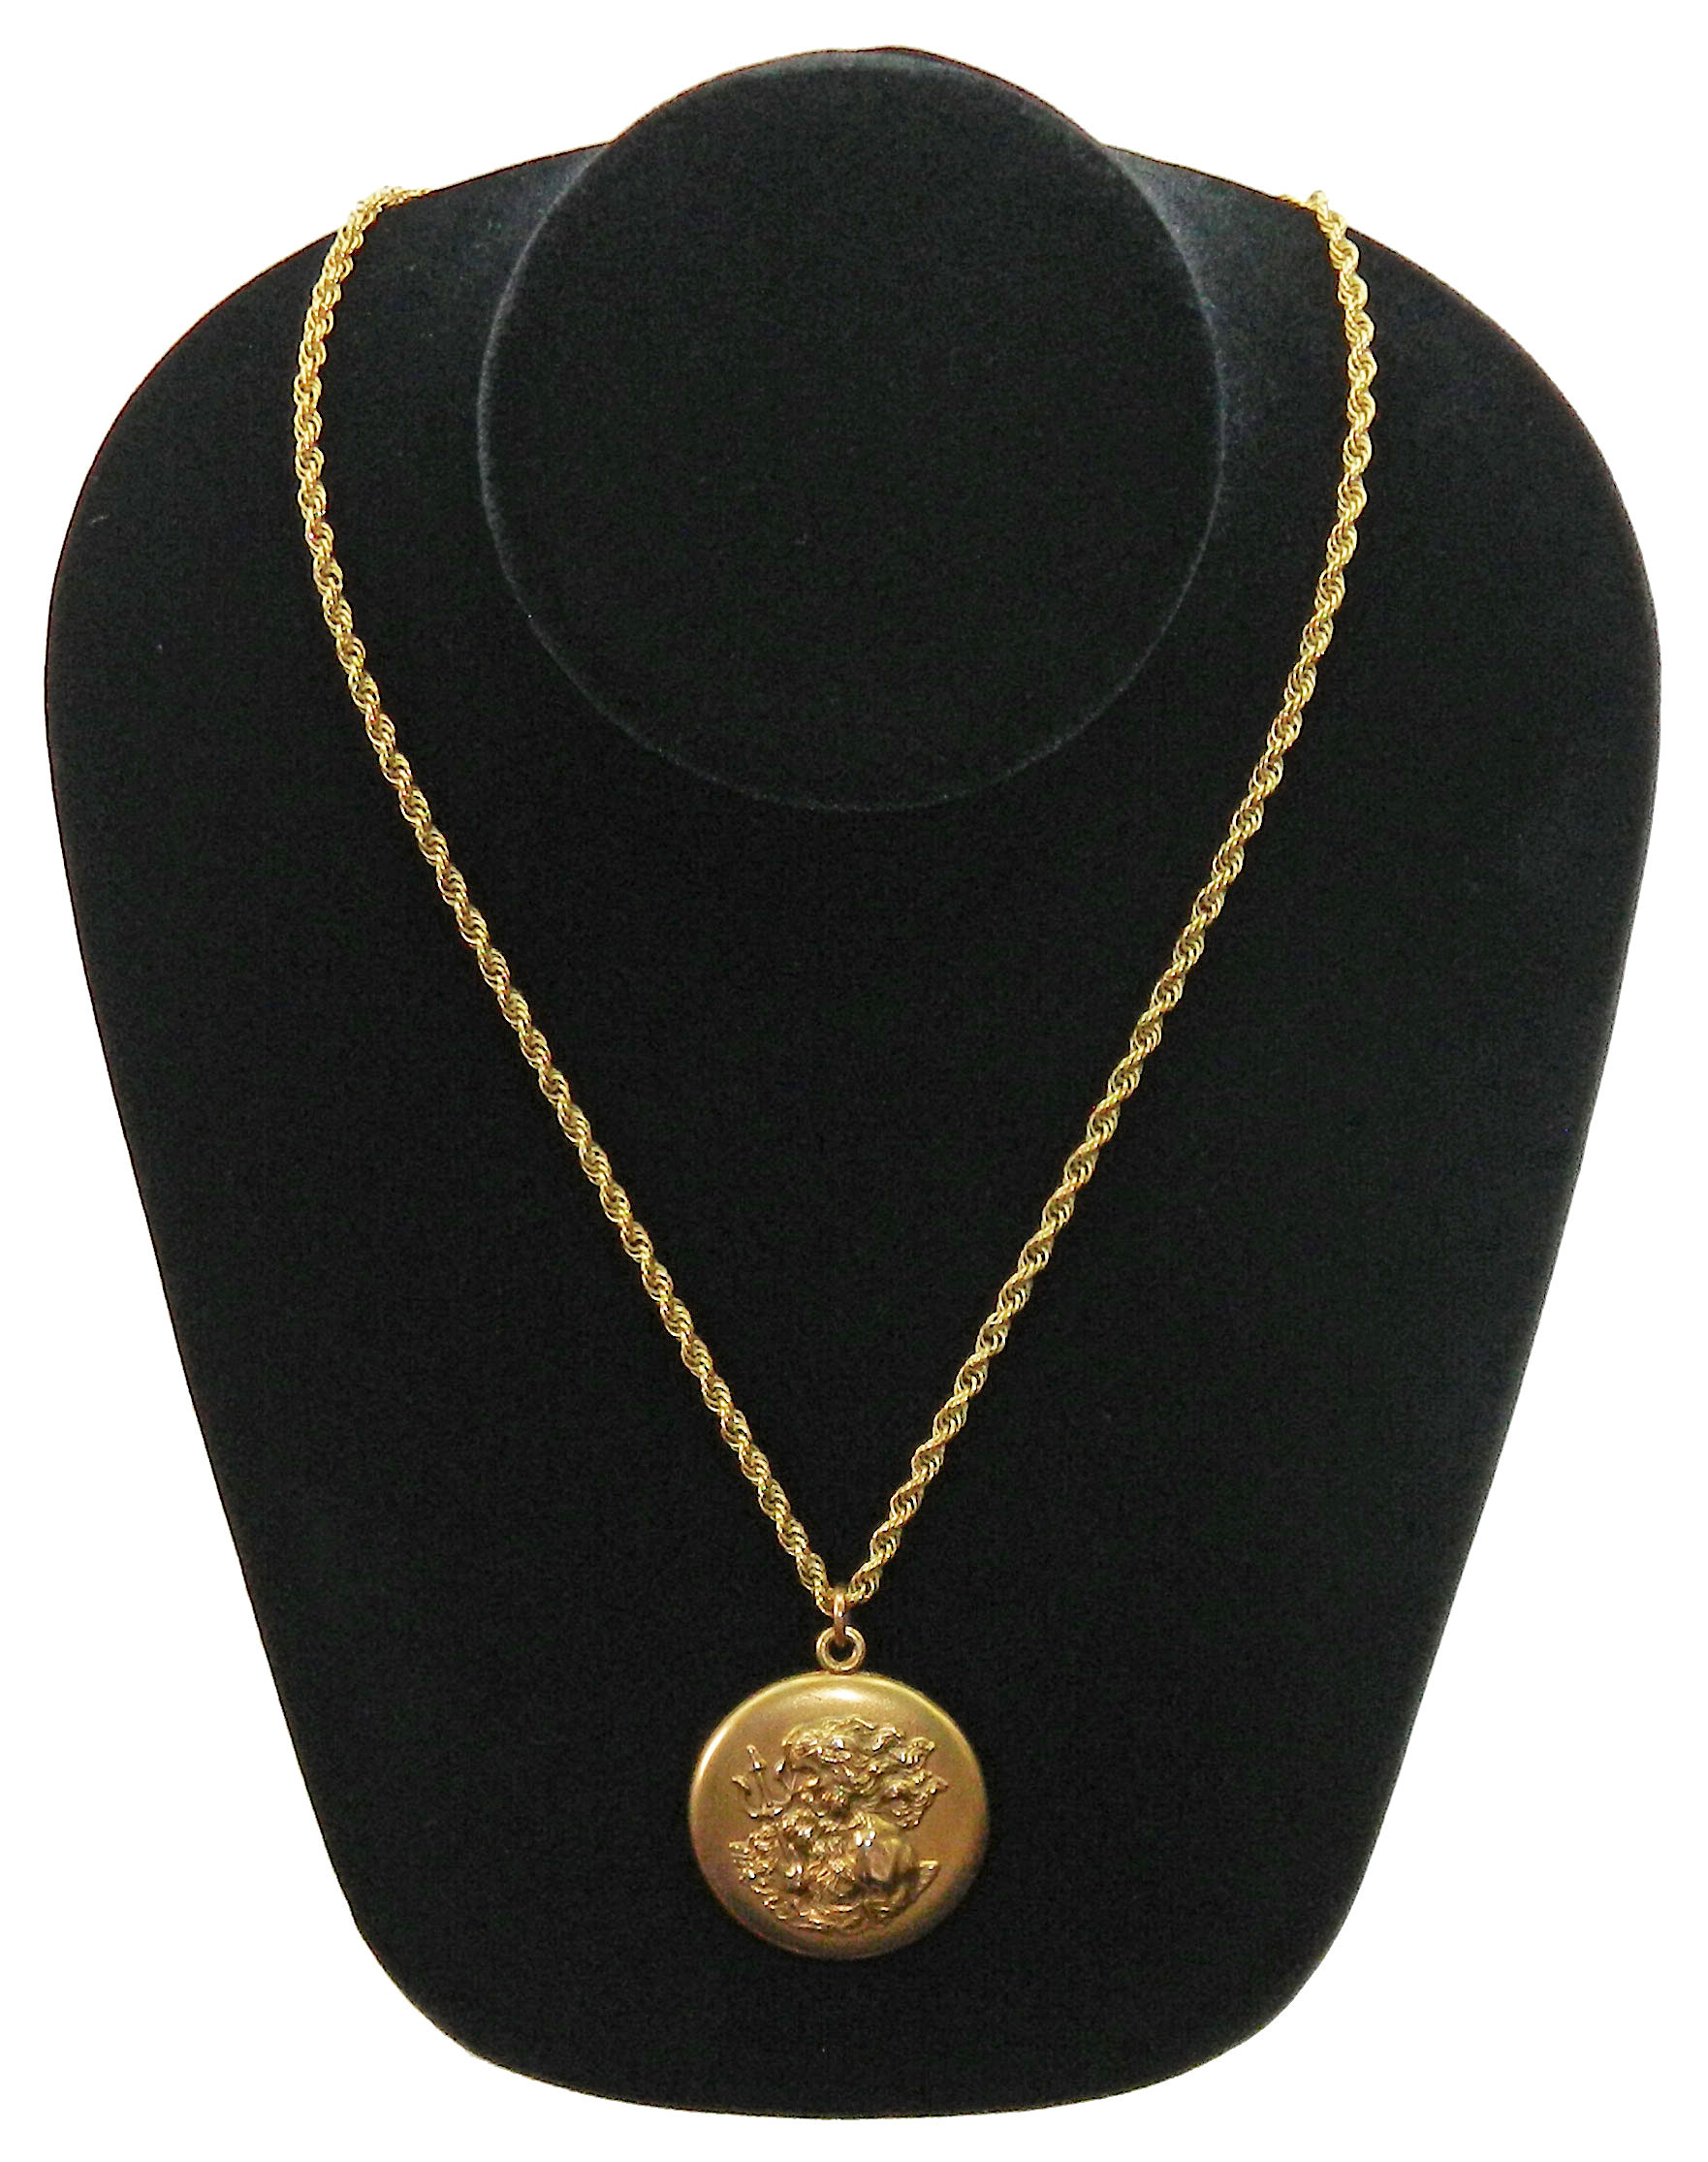 Antique Poseidon locket necklace